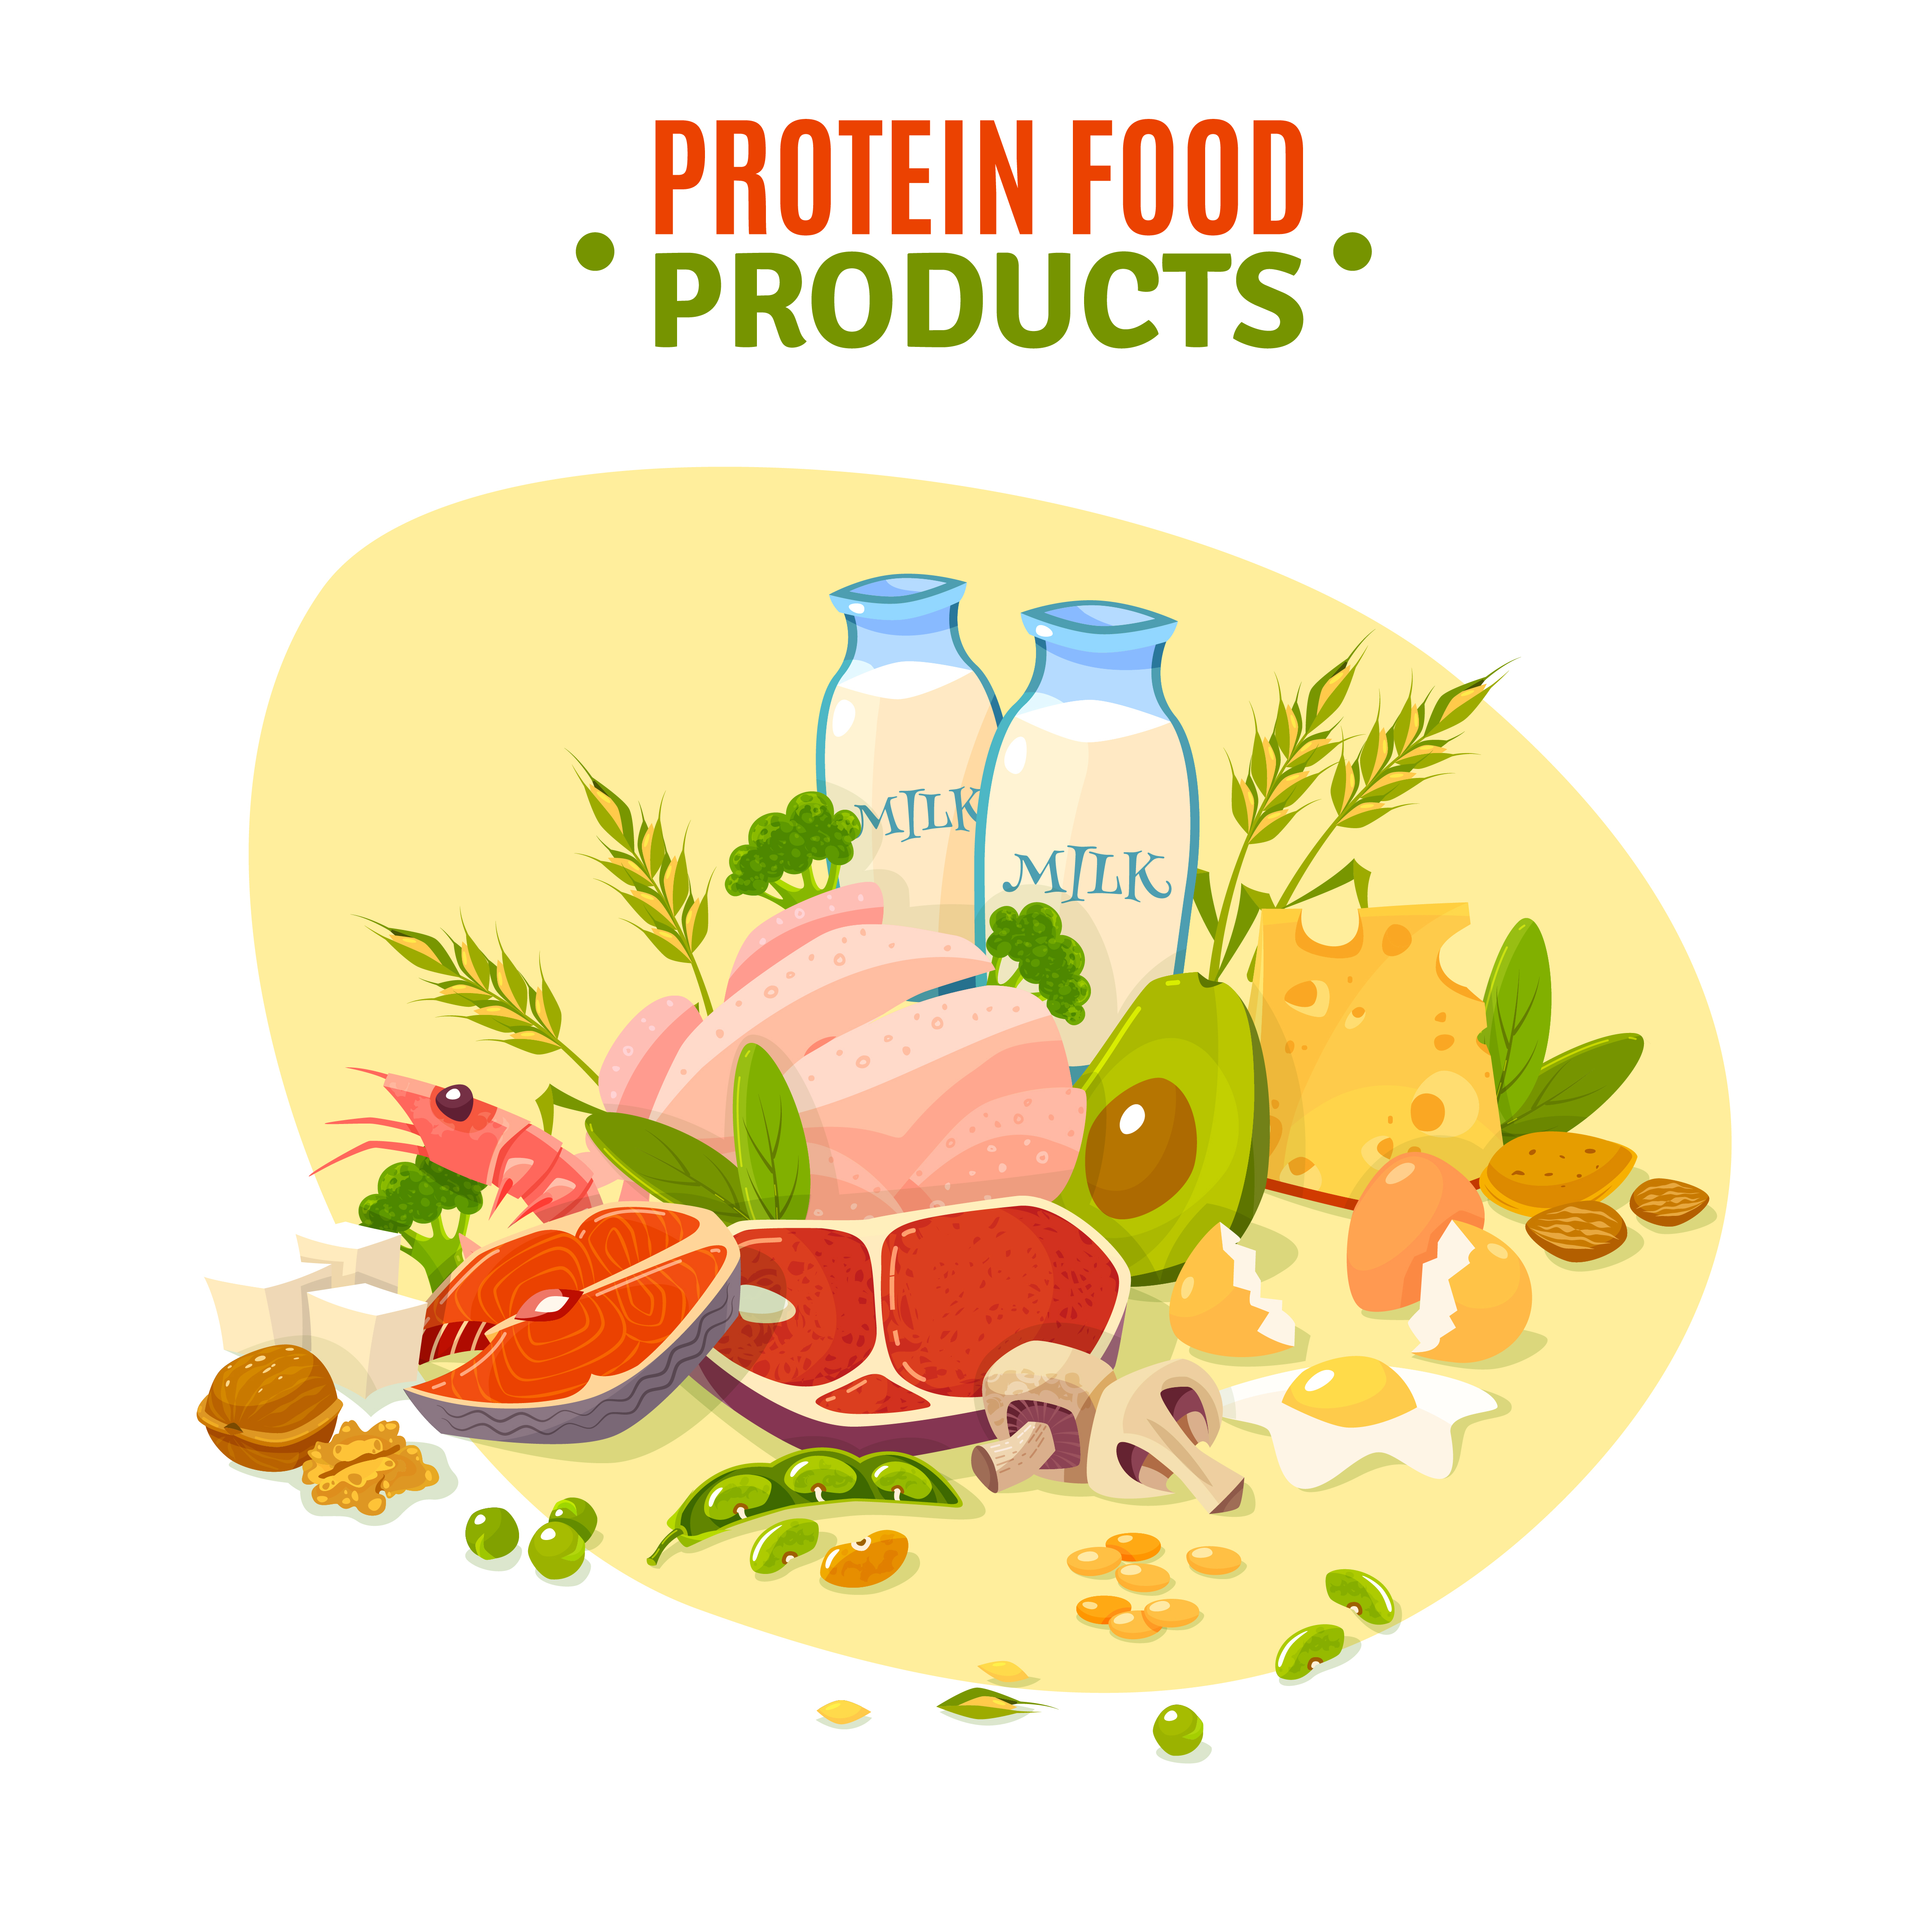 food sources, foods high in protein, essential amino acids, balanced diet, protein supplementation